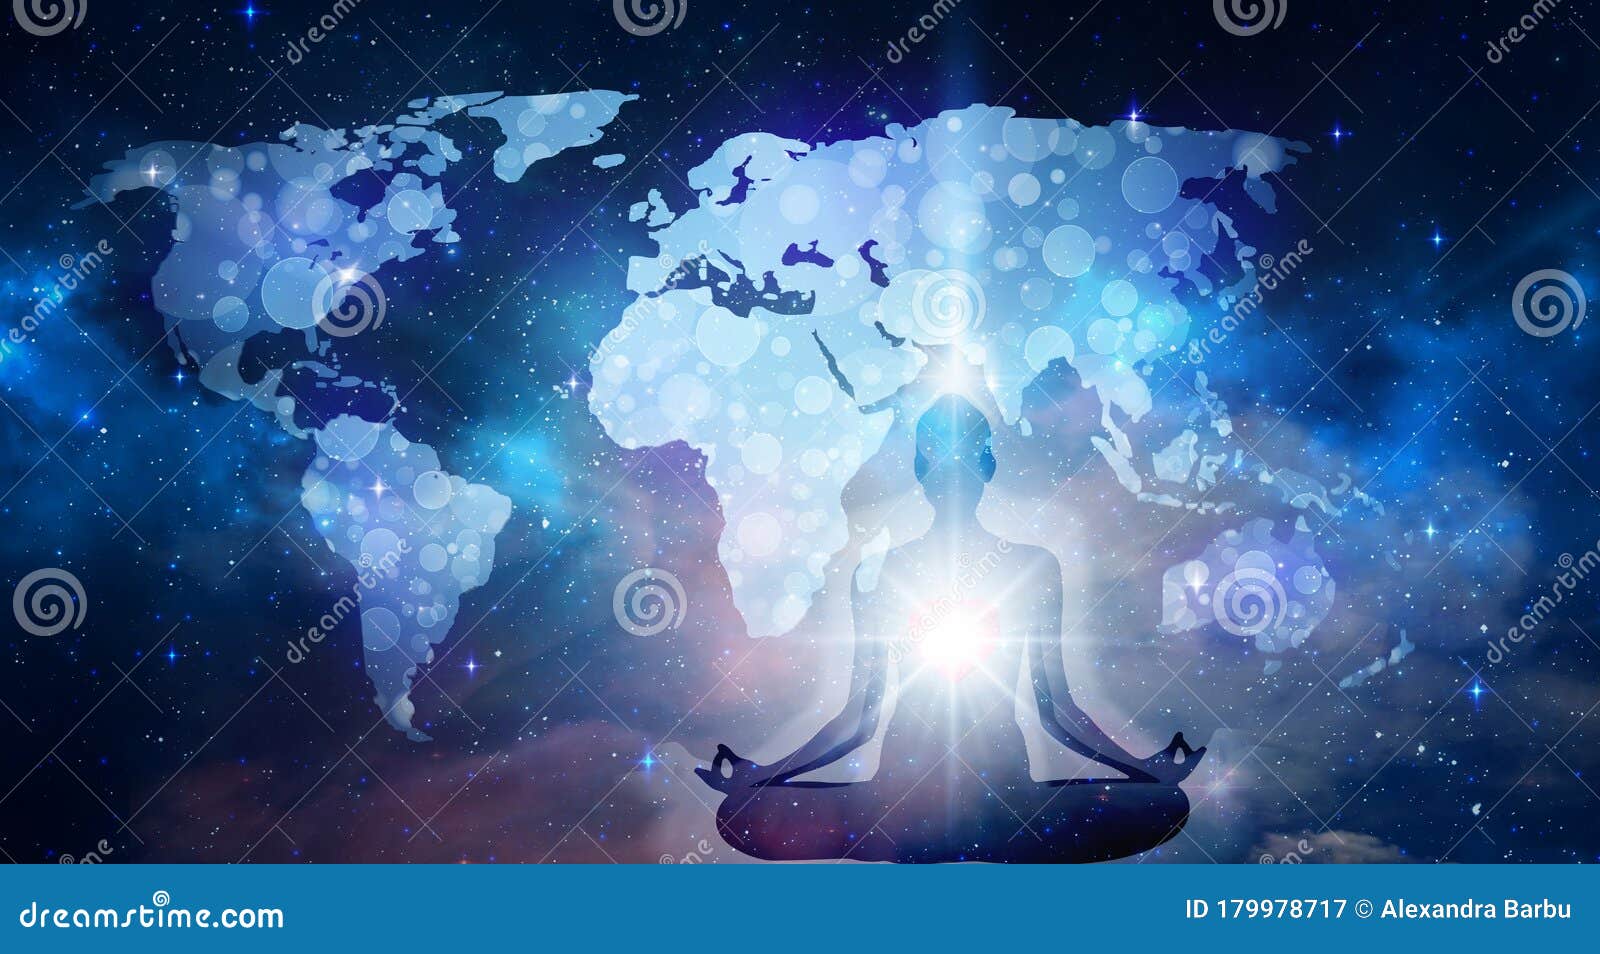 spiritual energy earth healing power, connection, conscience awakening, meditation, expansion